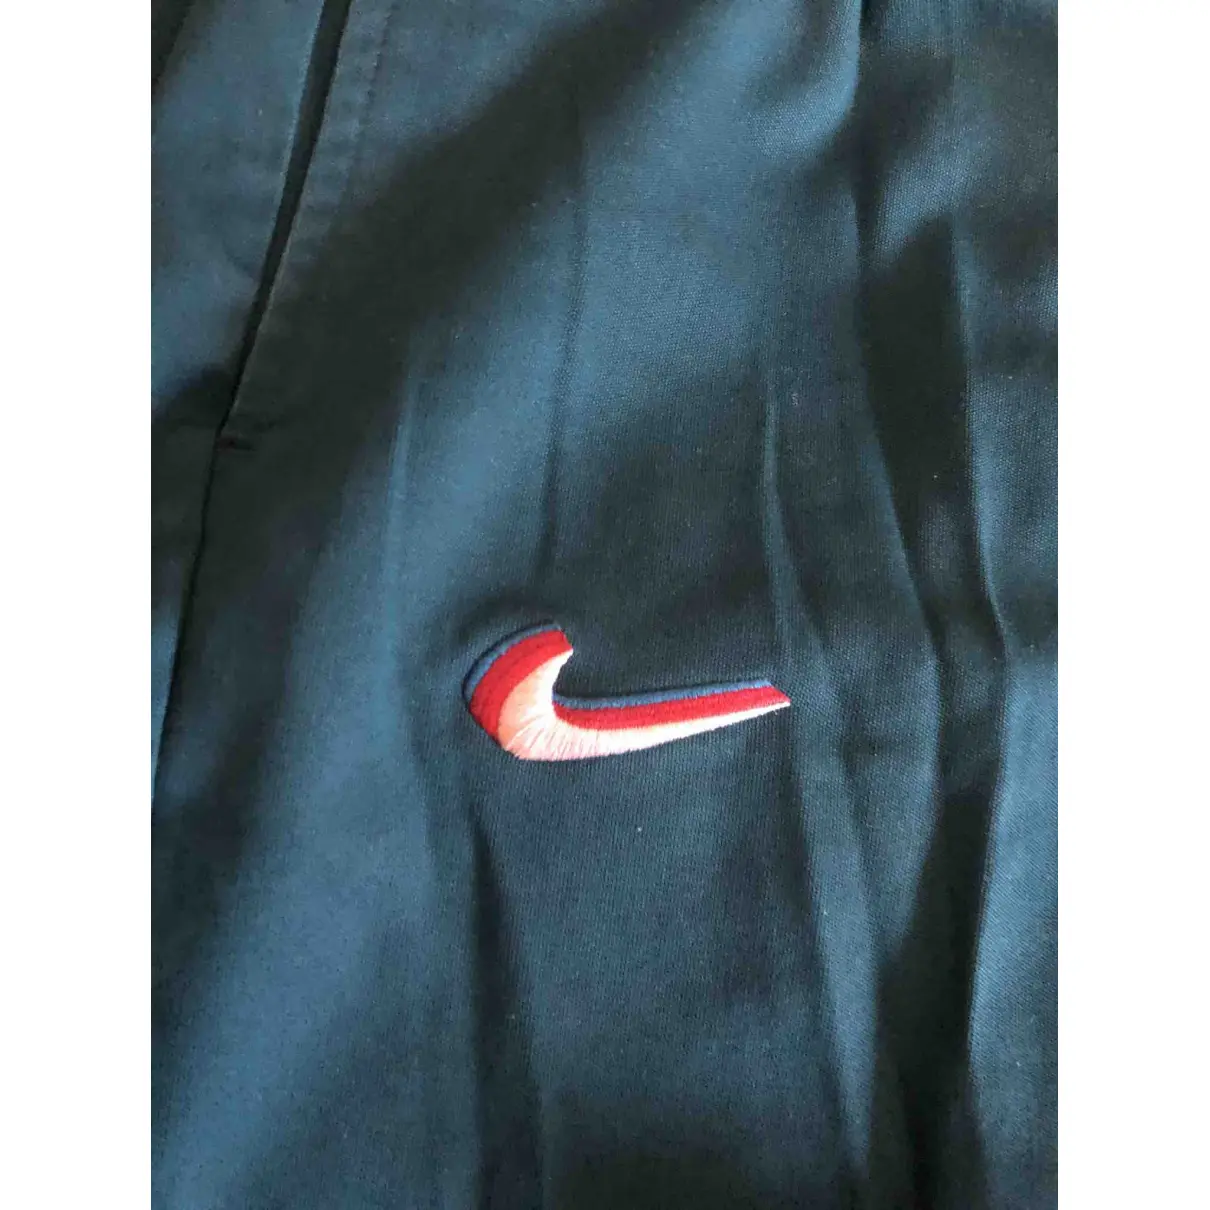 Buy Nike X Parra Trousers online